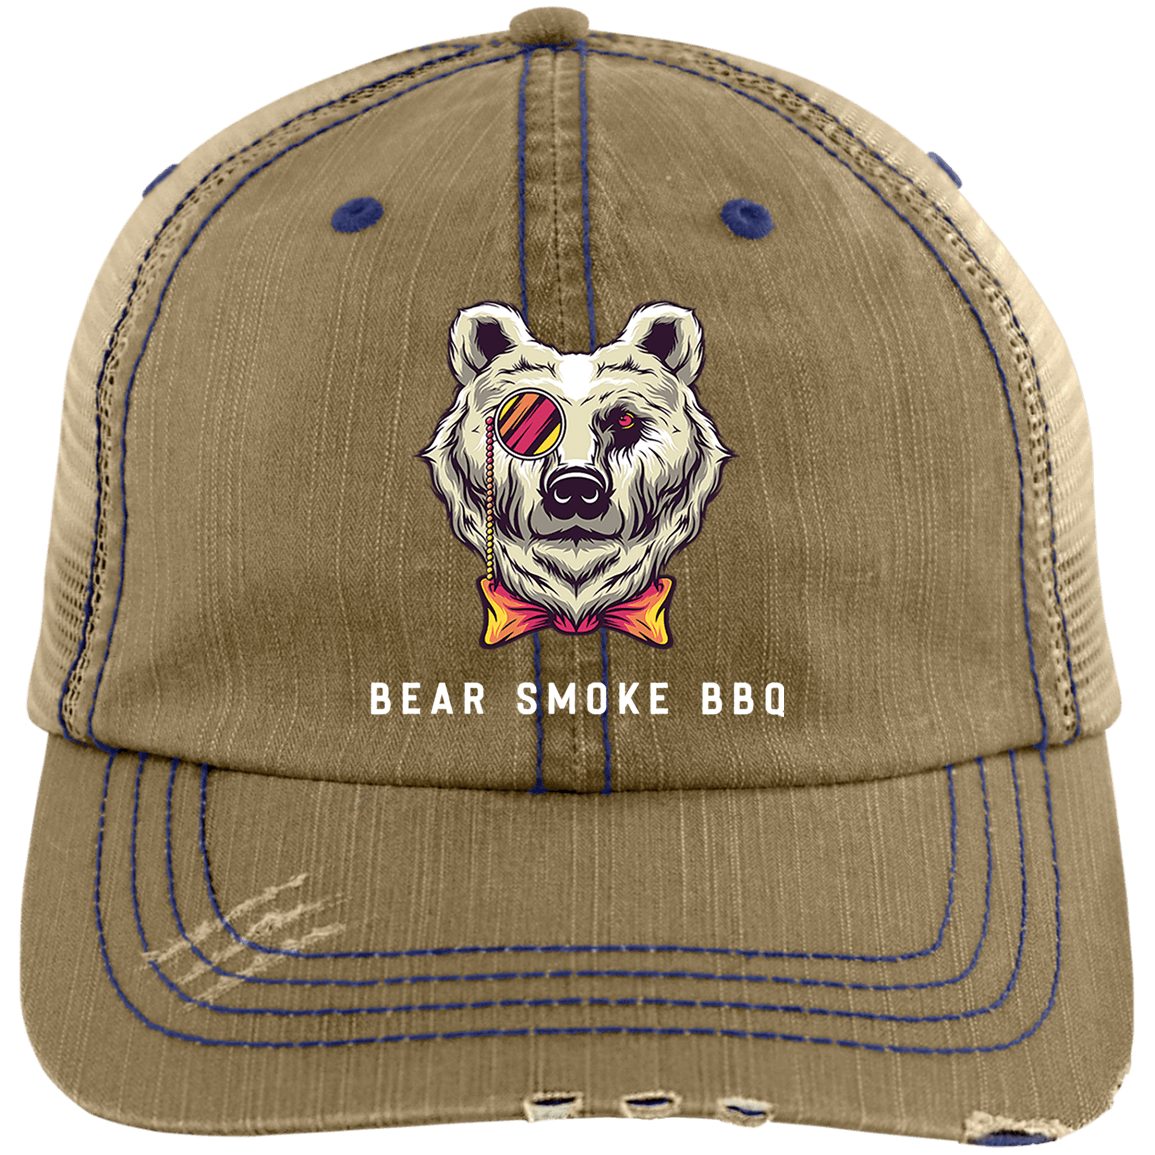 Bear Smoke Distressed Unstructured Trucker Cap - Bear Smoke BBQ